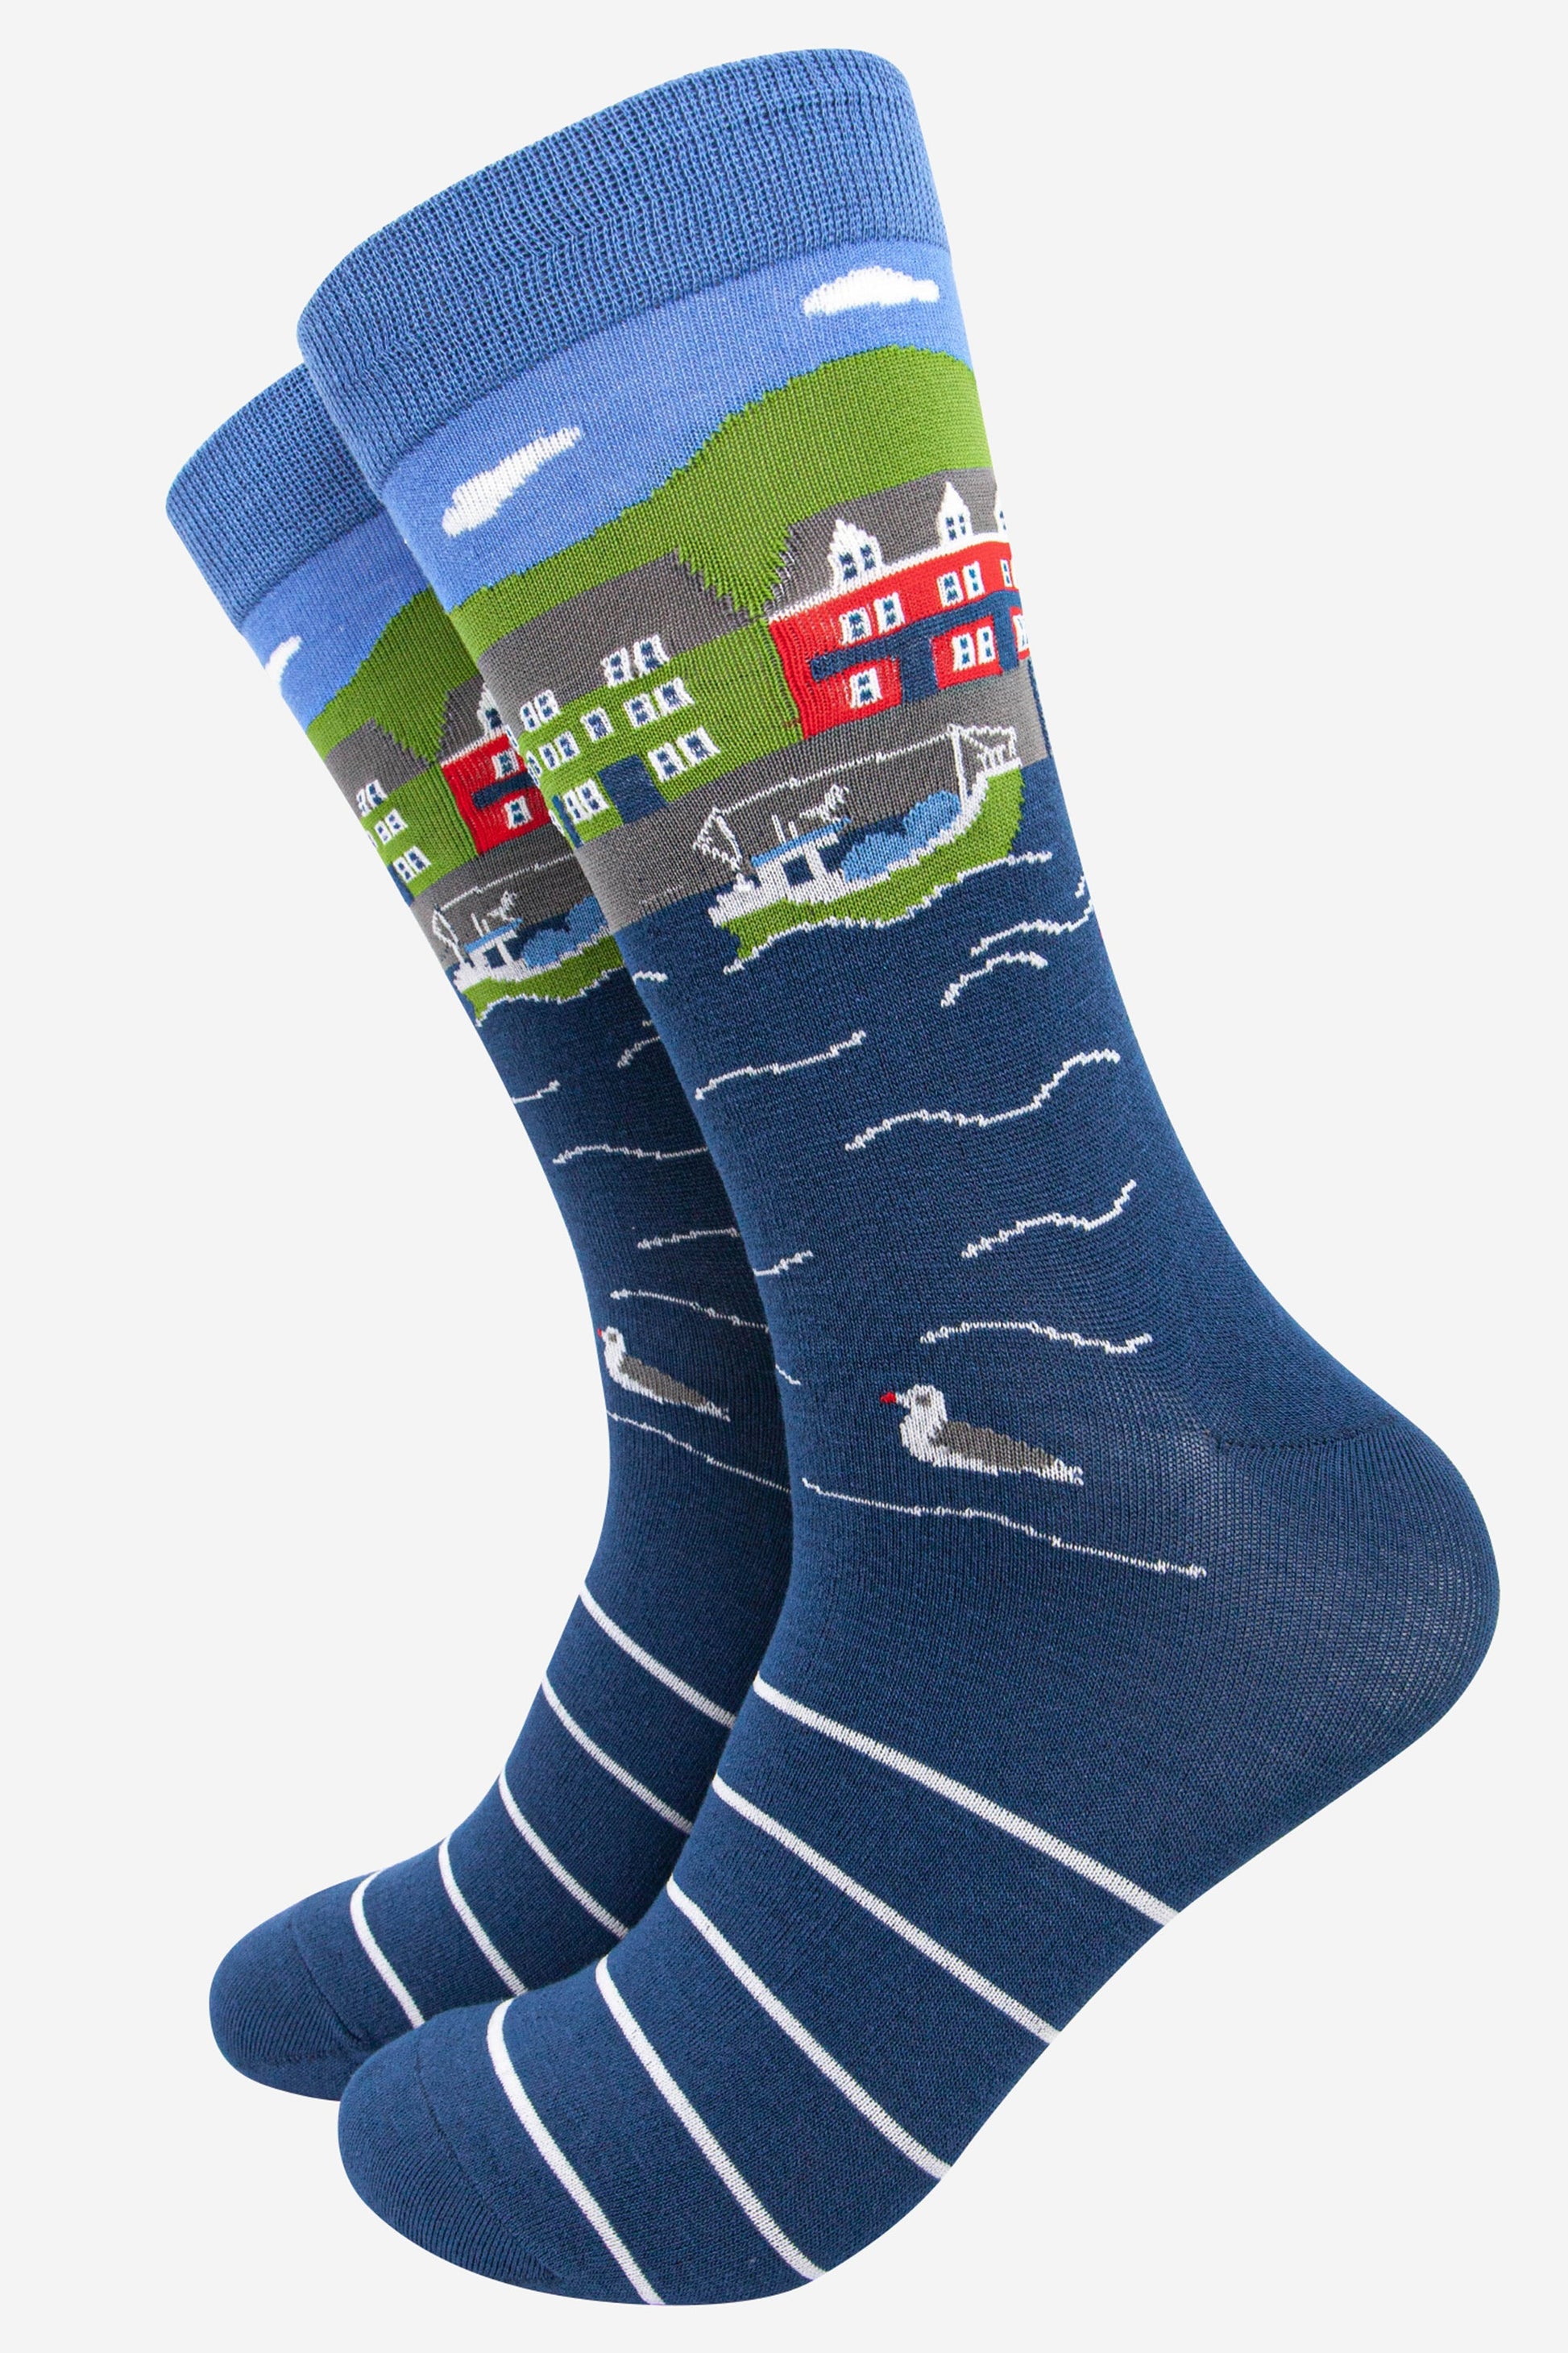 Sock Talk UK Men's Bamboo Socks Fishing Village Nautical Dress Sock